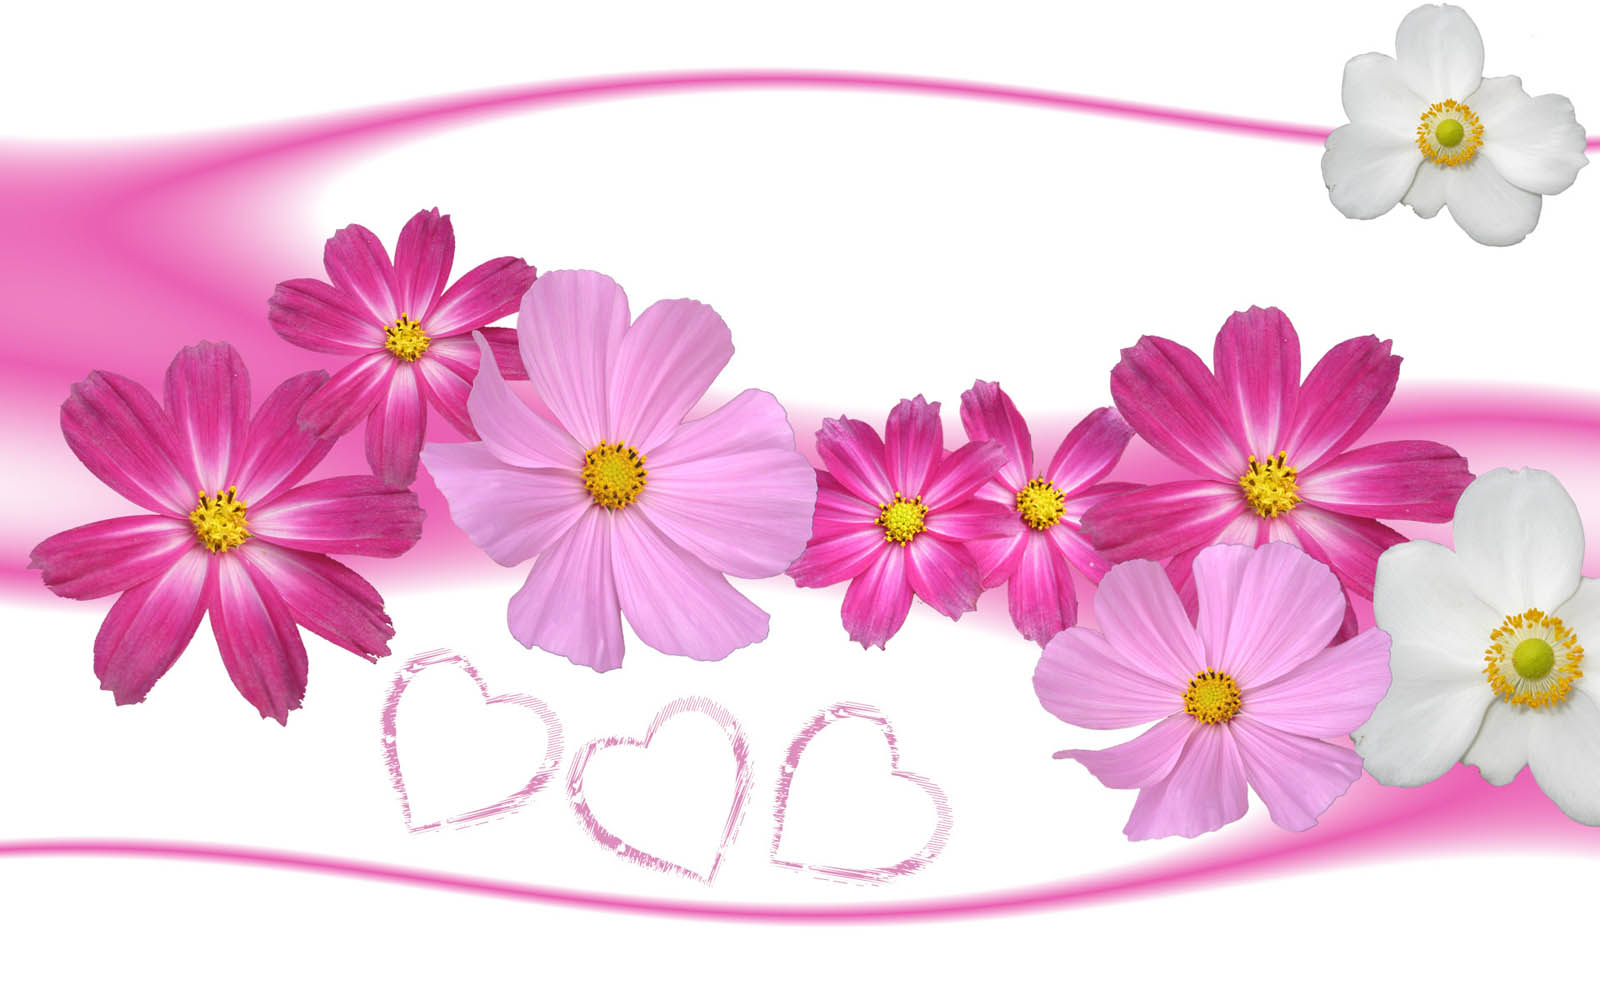 Gambar Gambar Bunga Berwarna Merah Muda